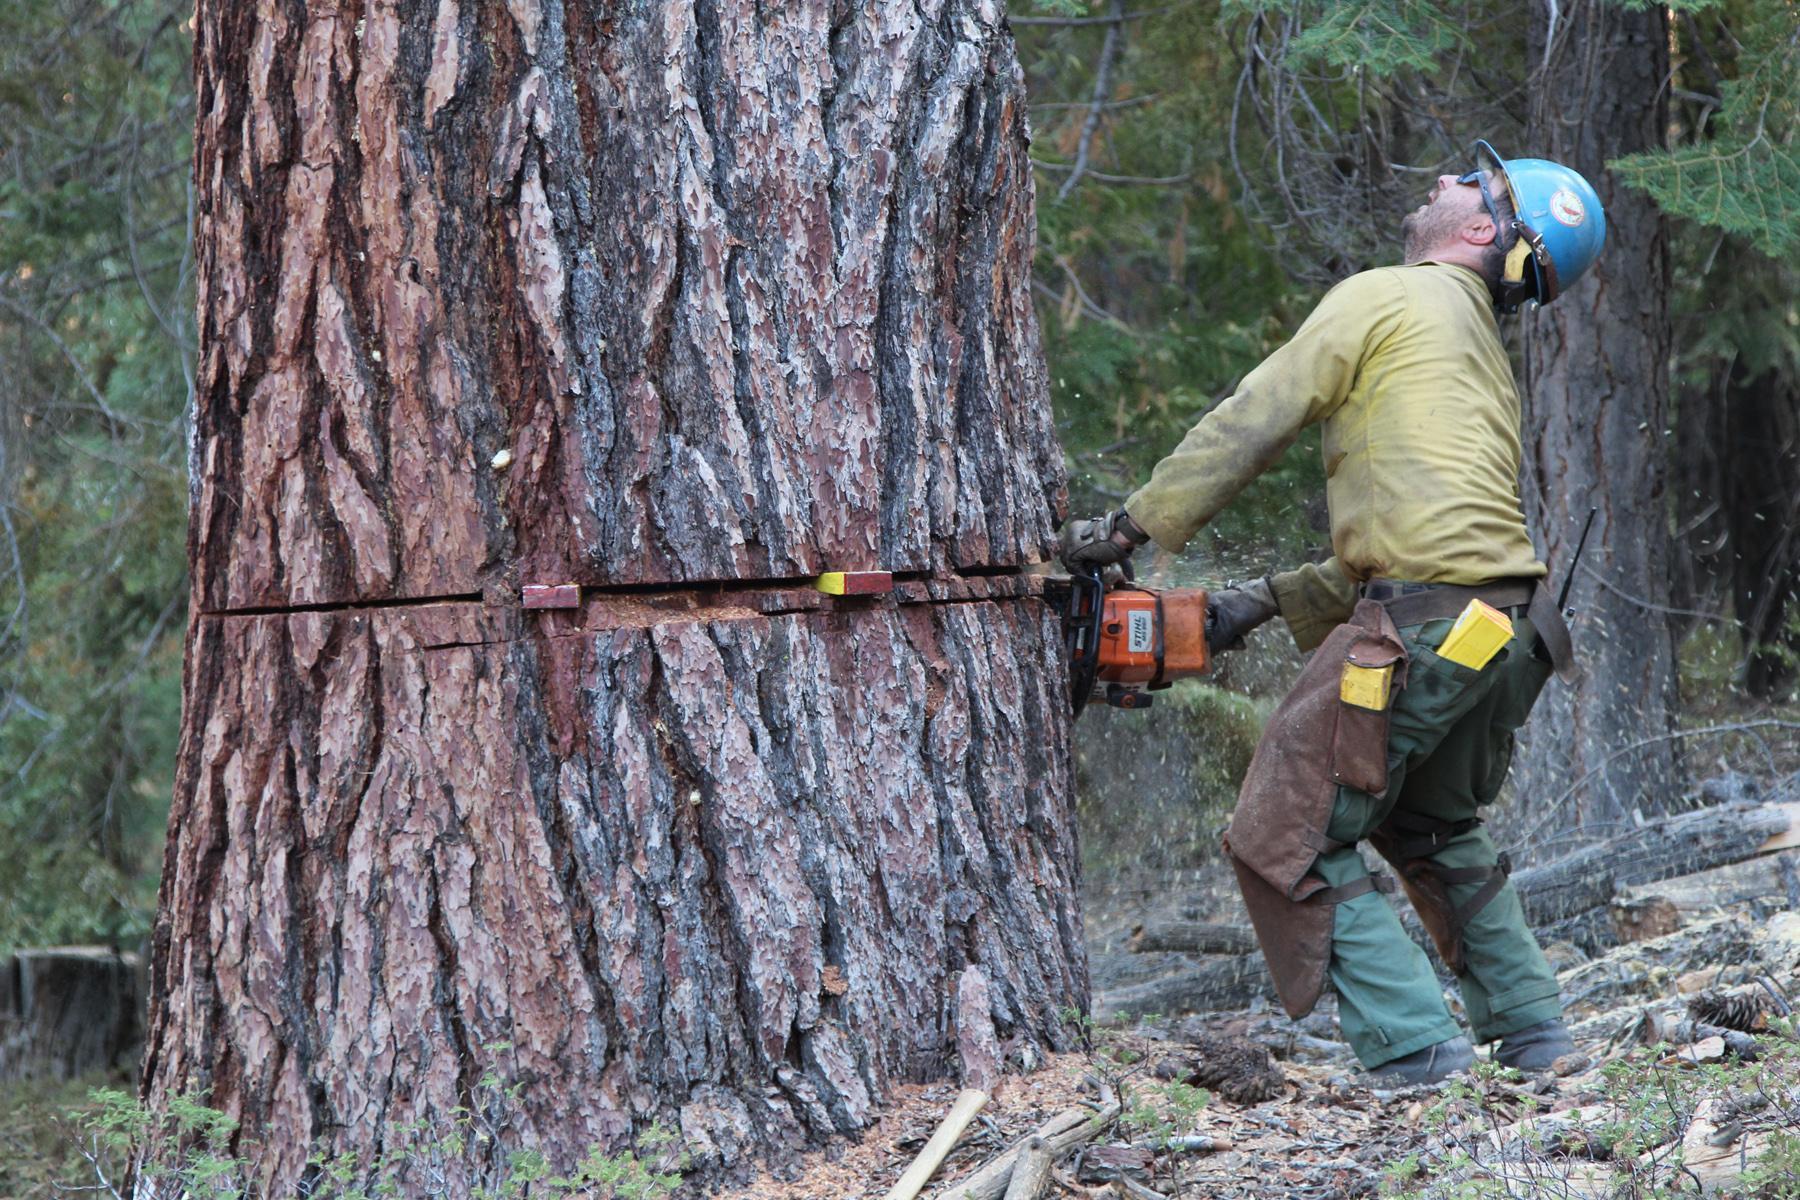 Plumas Hotshot Sawyer Back Cuts Hazard Tree Along Road 107. Photo: Mike McMillan - BIA